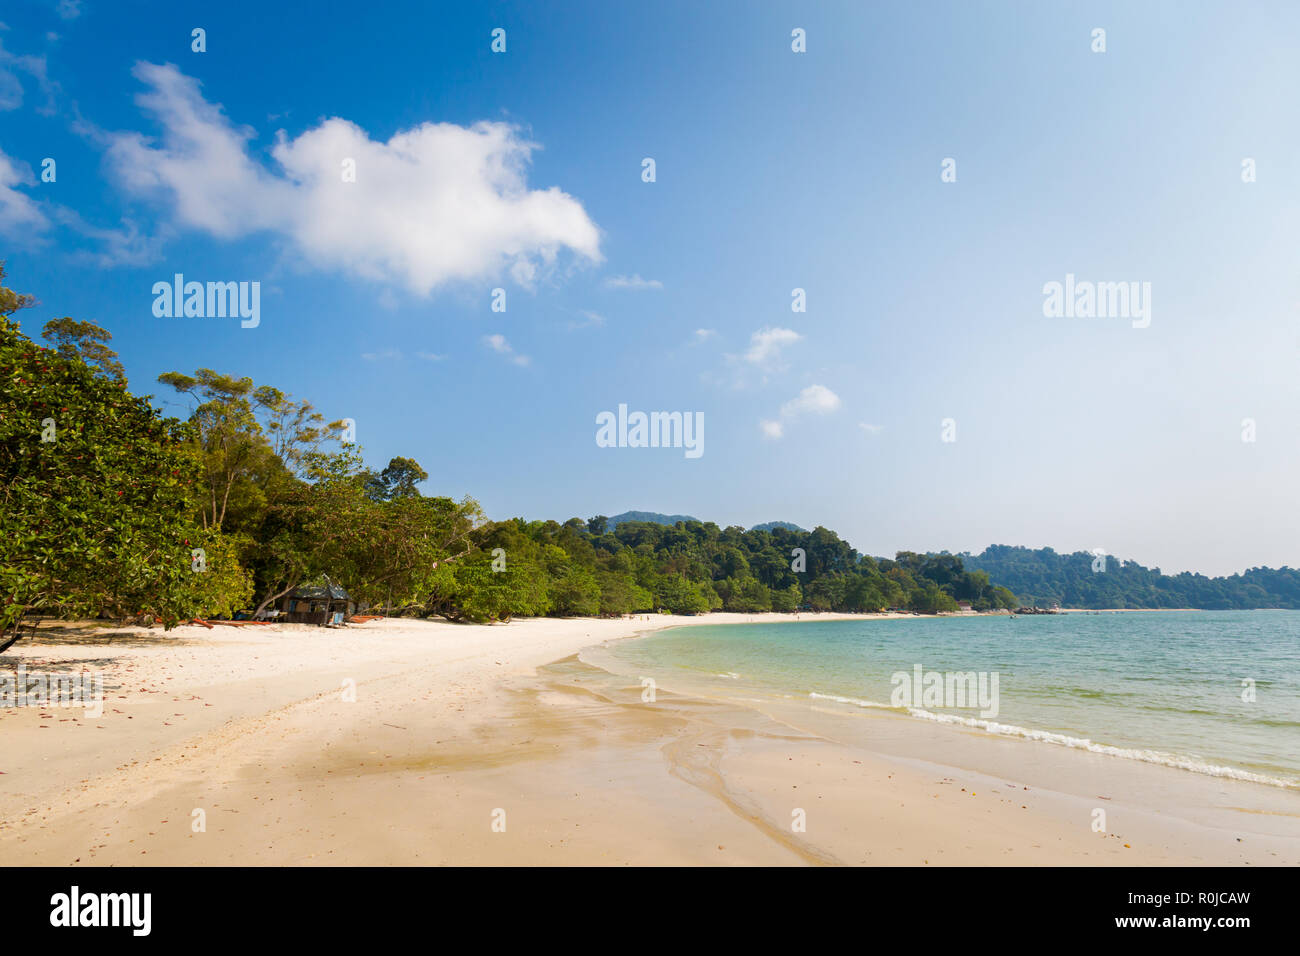 teluk nipah coral beach on pangkor island in malaysia beautiful landscape with sea taken in south east asia R0JCAW